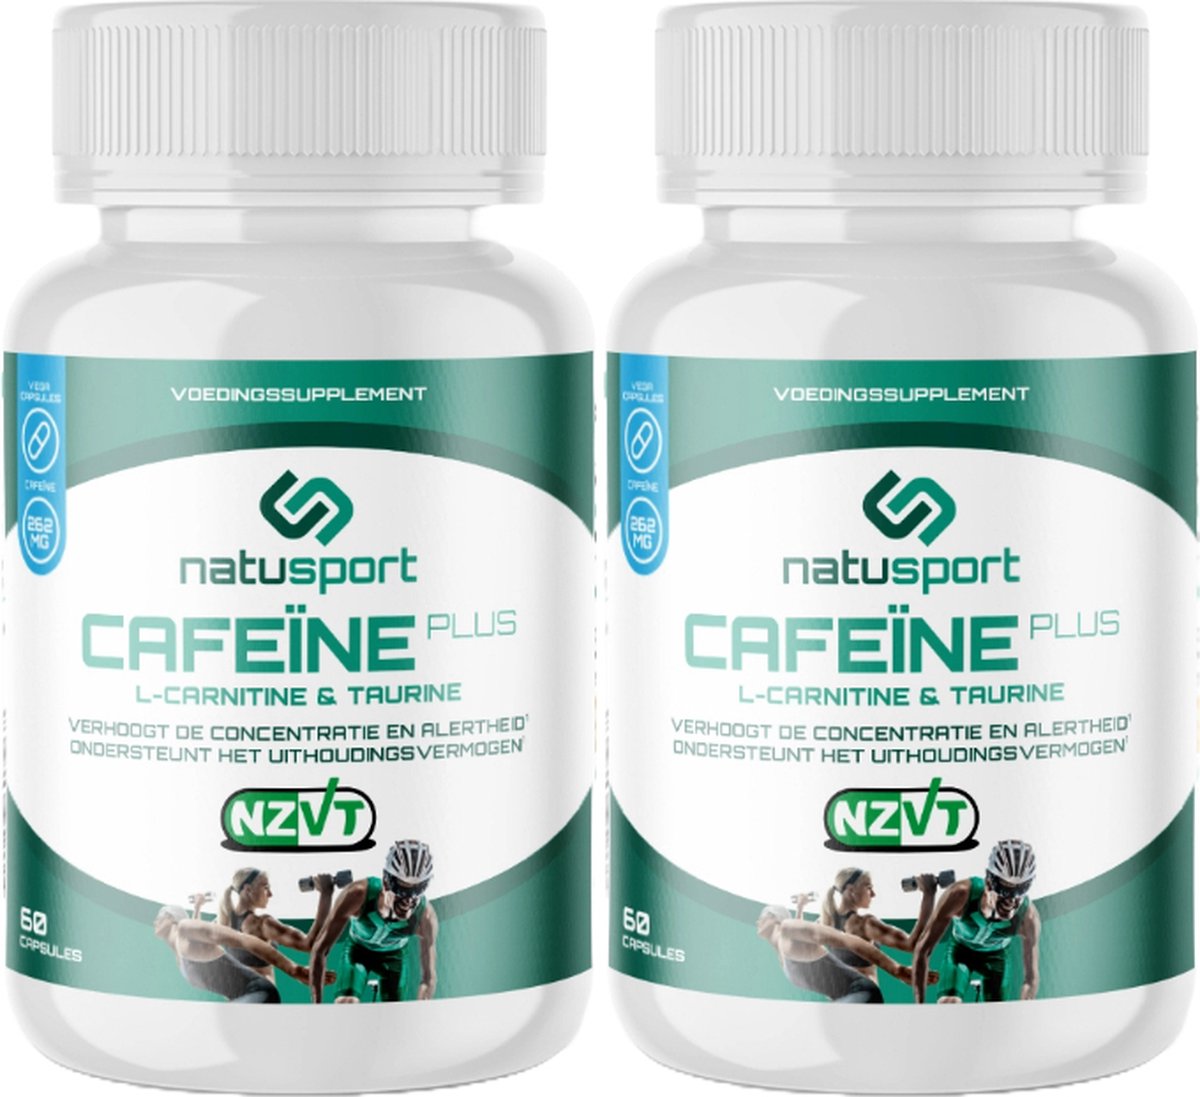 1+1 gratis Natusport Cafeïne plus (met o.a Ketone, L-carnitine & Taurine) 2x60 capsules (250mg cafeïne) NZVT getest